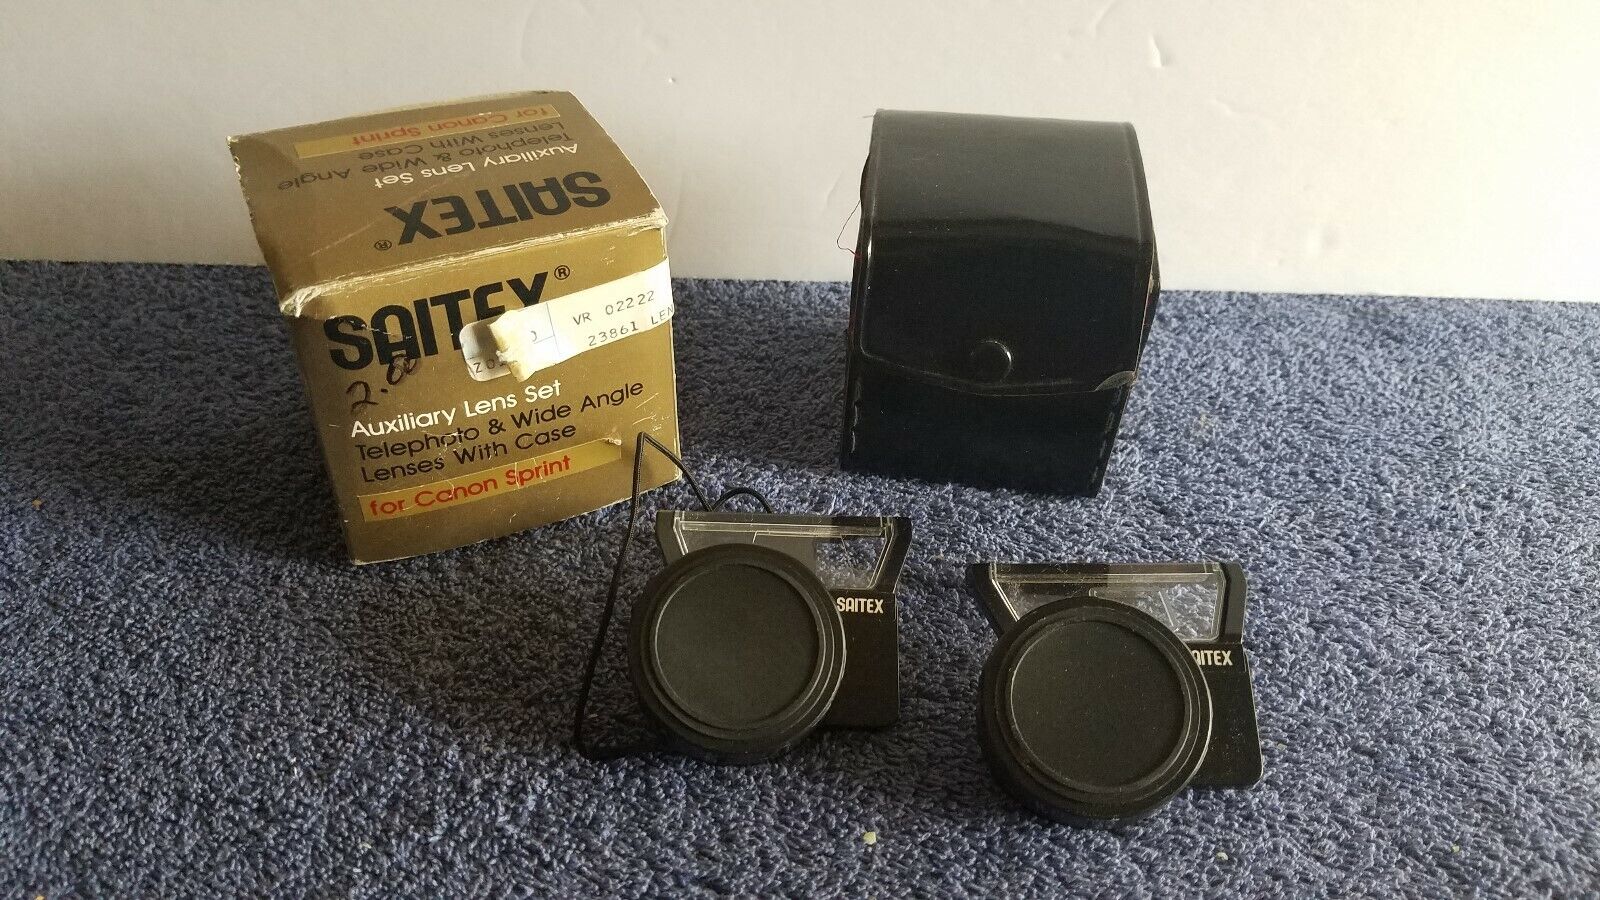 NOS Vintage Saitex Auxiliary Lens Set For Canon Sprint Japan w/Box C6